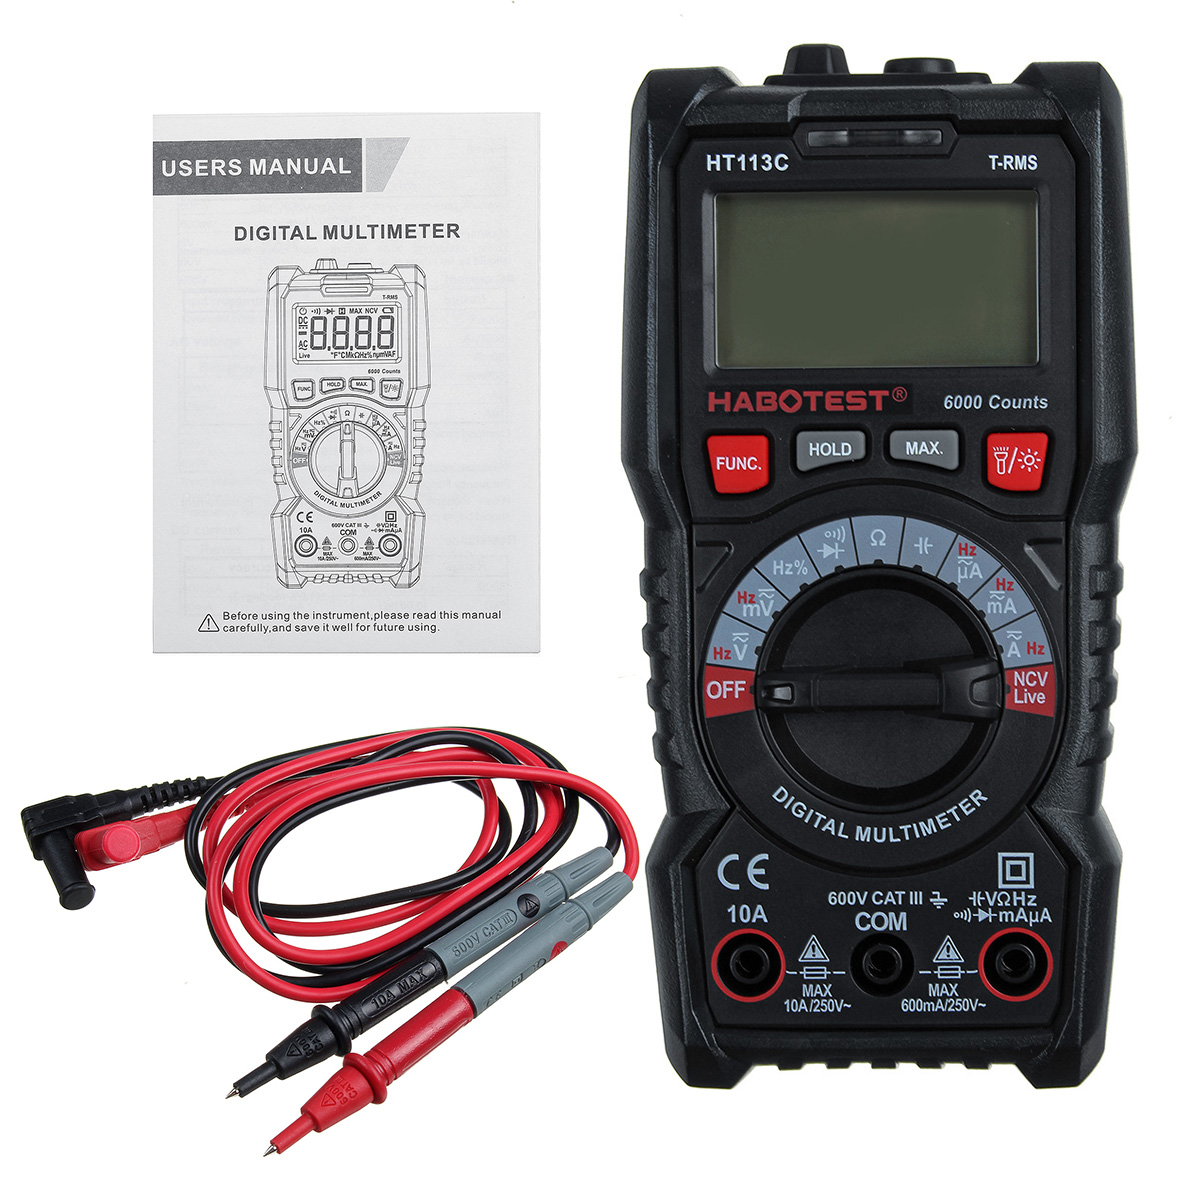 HT113C-Professional-Handheld-LCD-Digital-Multimeter-with-Flashlight-ACDC-Voltage-Meter-Amperemeter-O-1816345-13